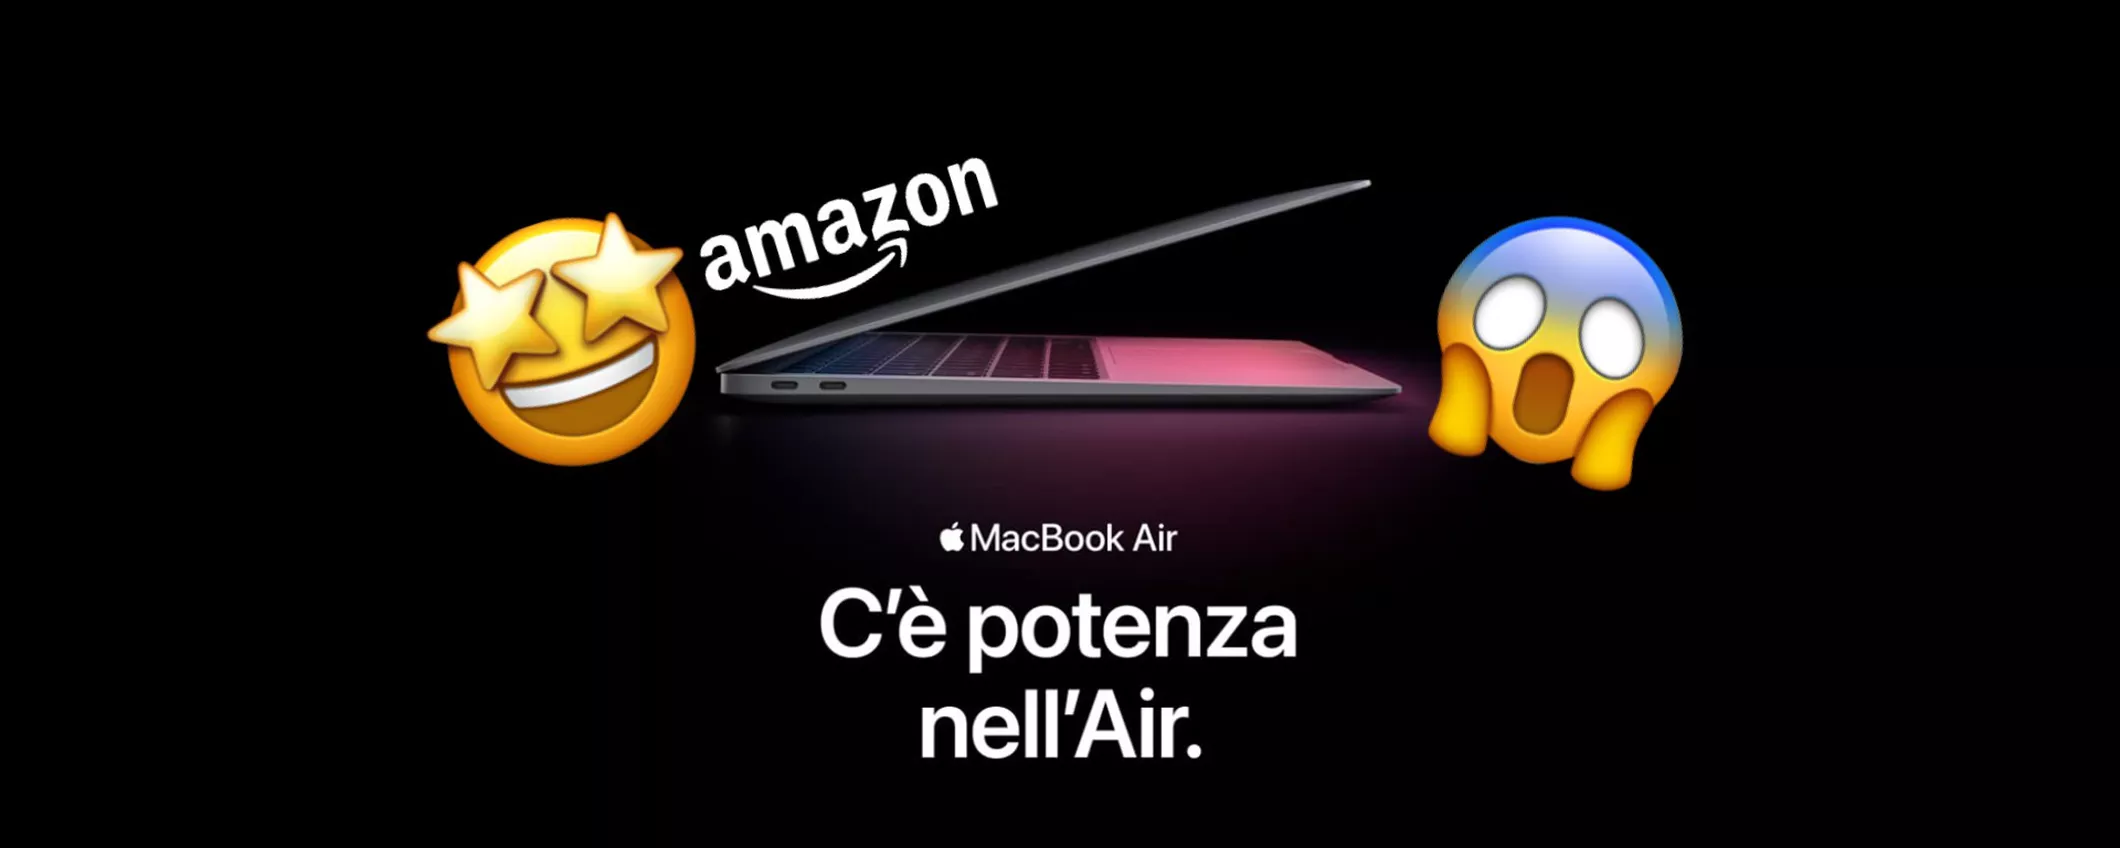 MacBook Air M1: con lo sconto Amazon del 21% scende a 969€